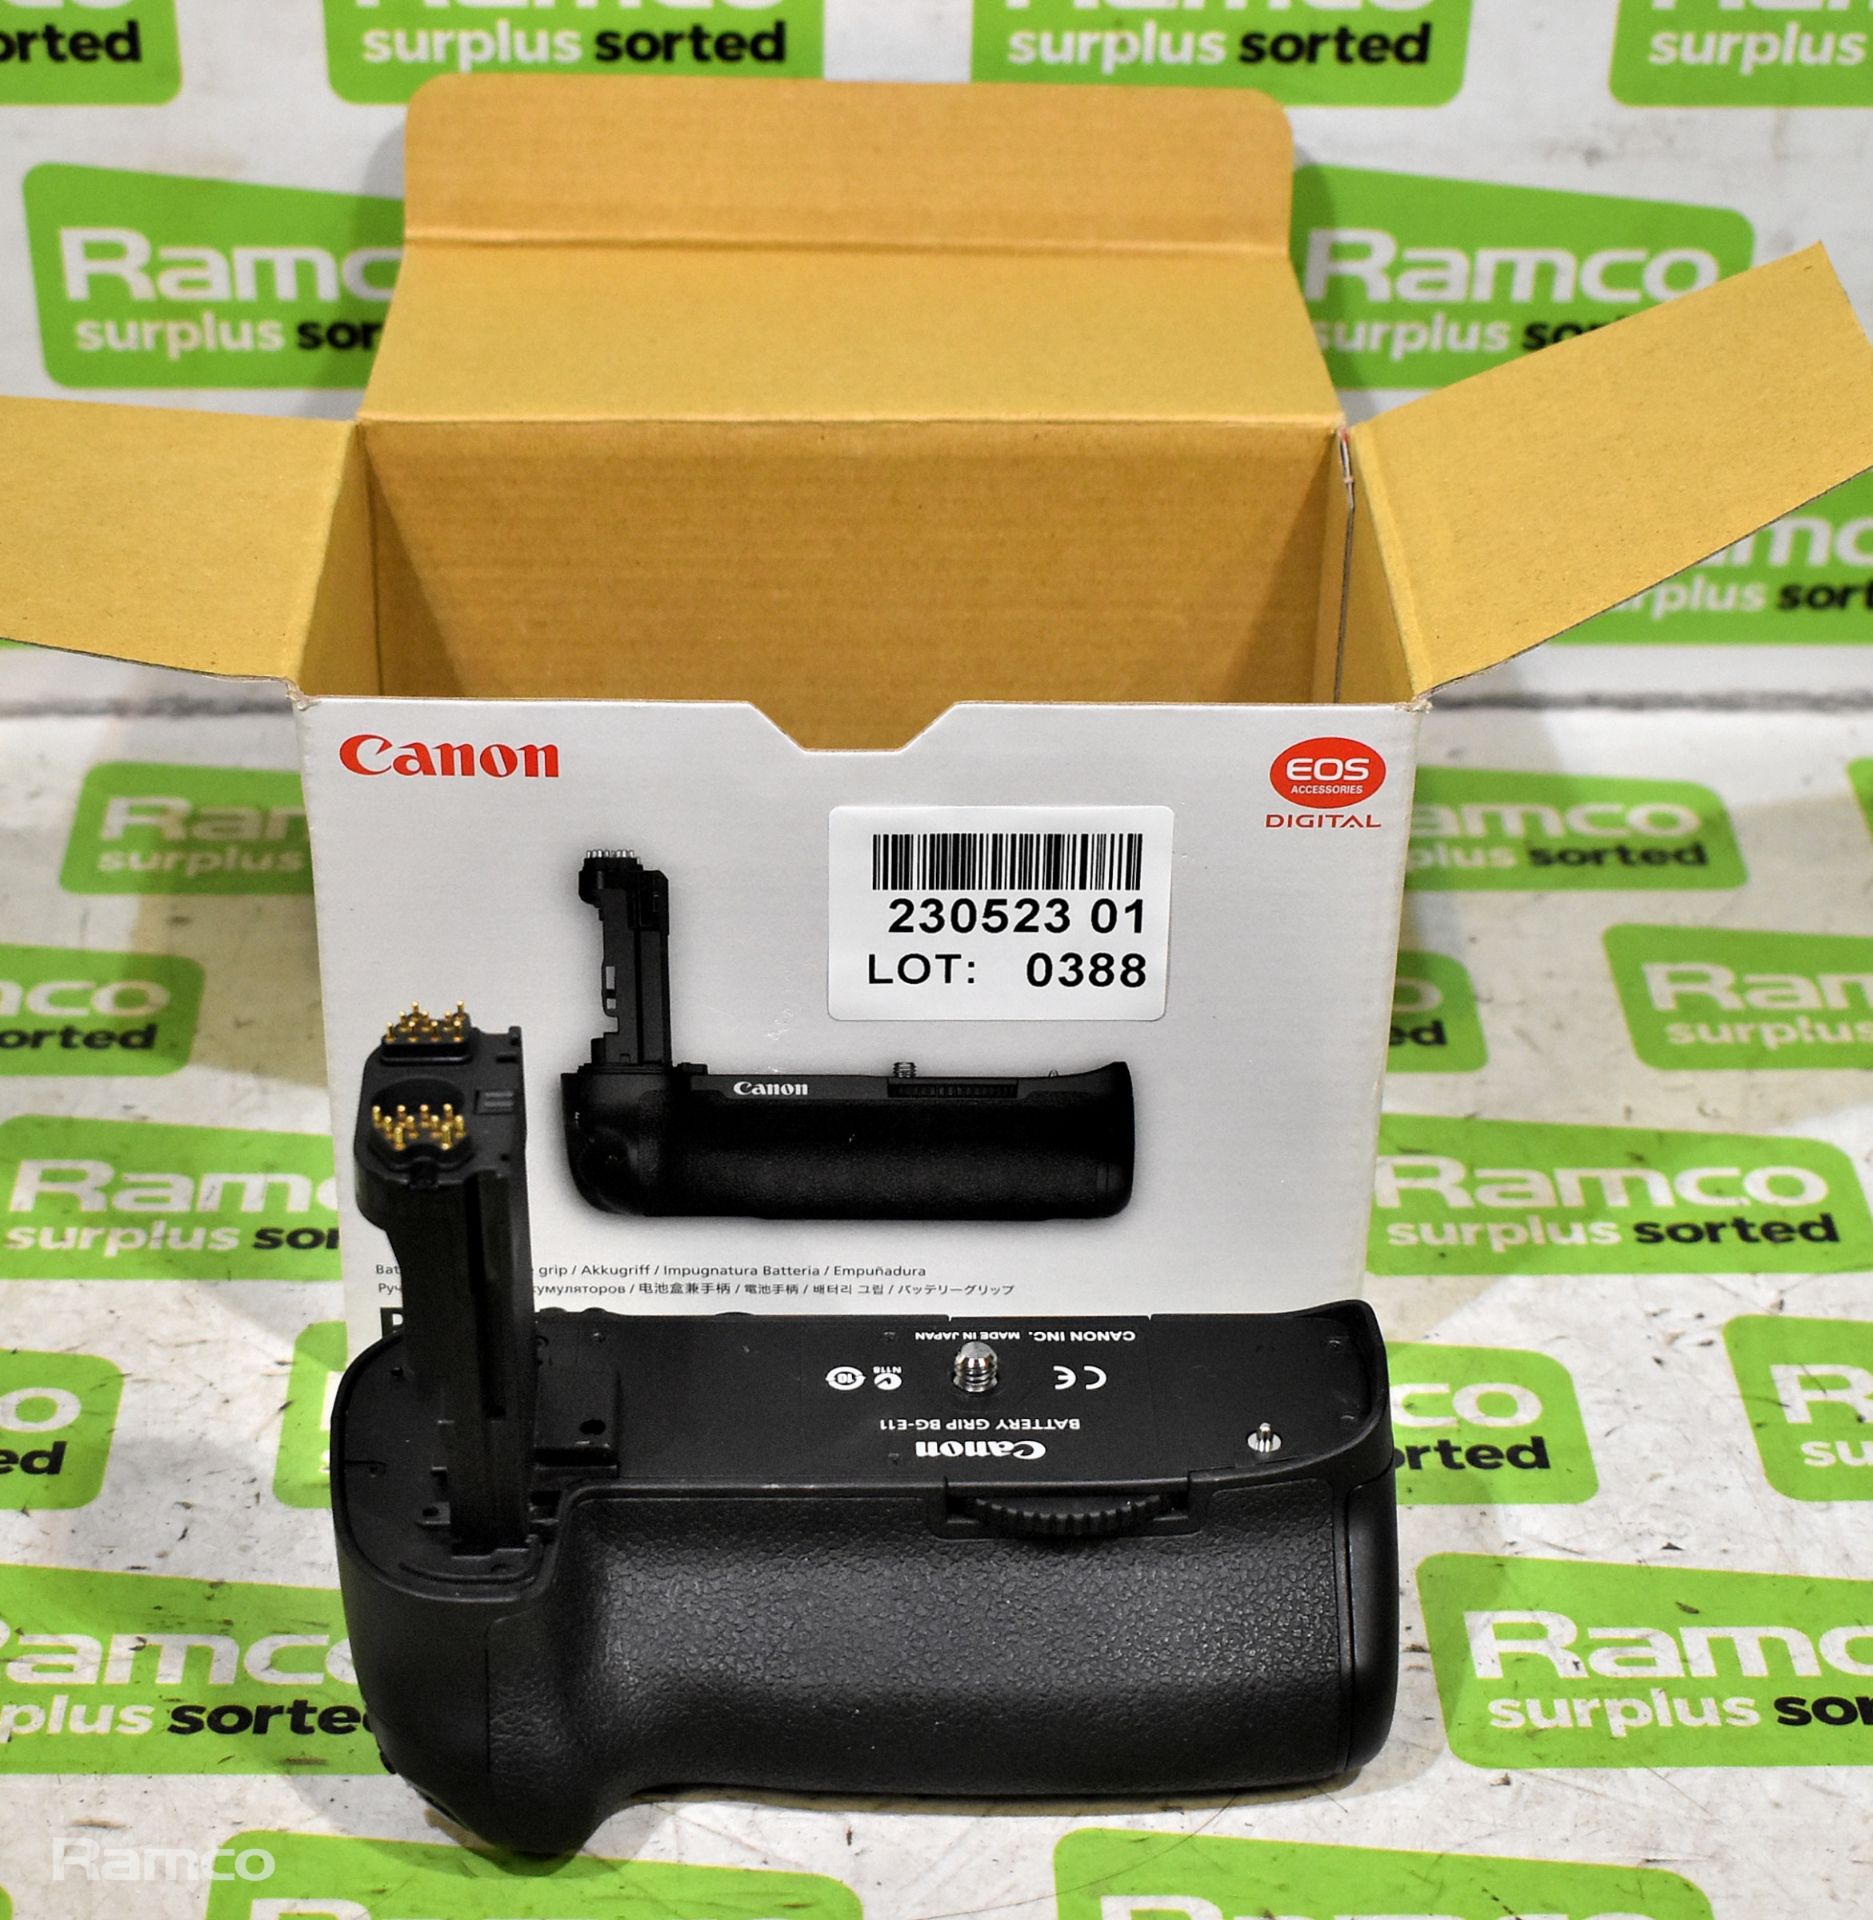 Canon BG-E20 battery grip with case